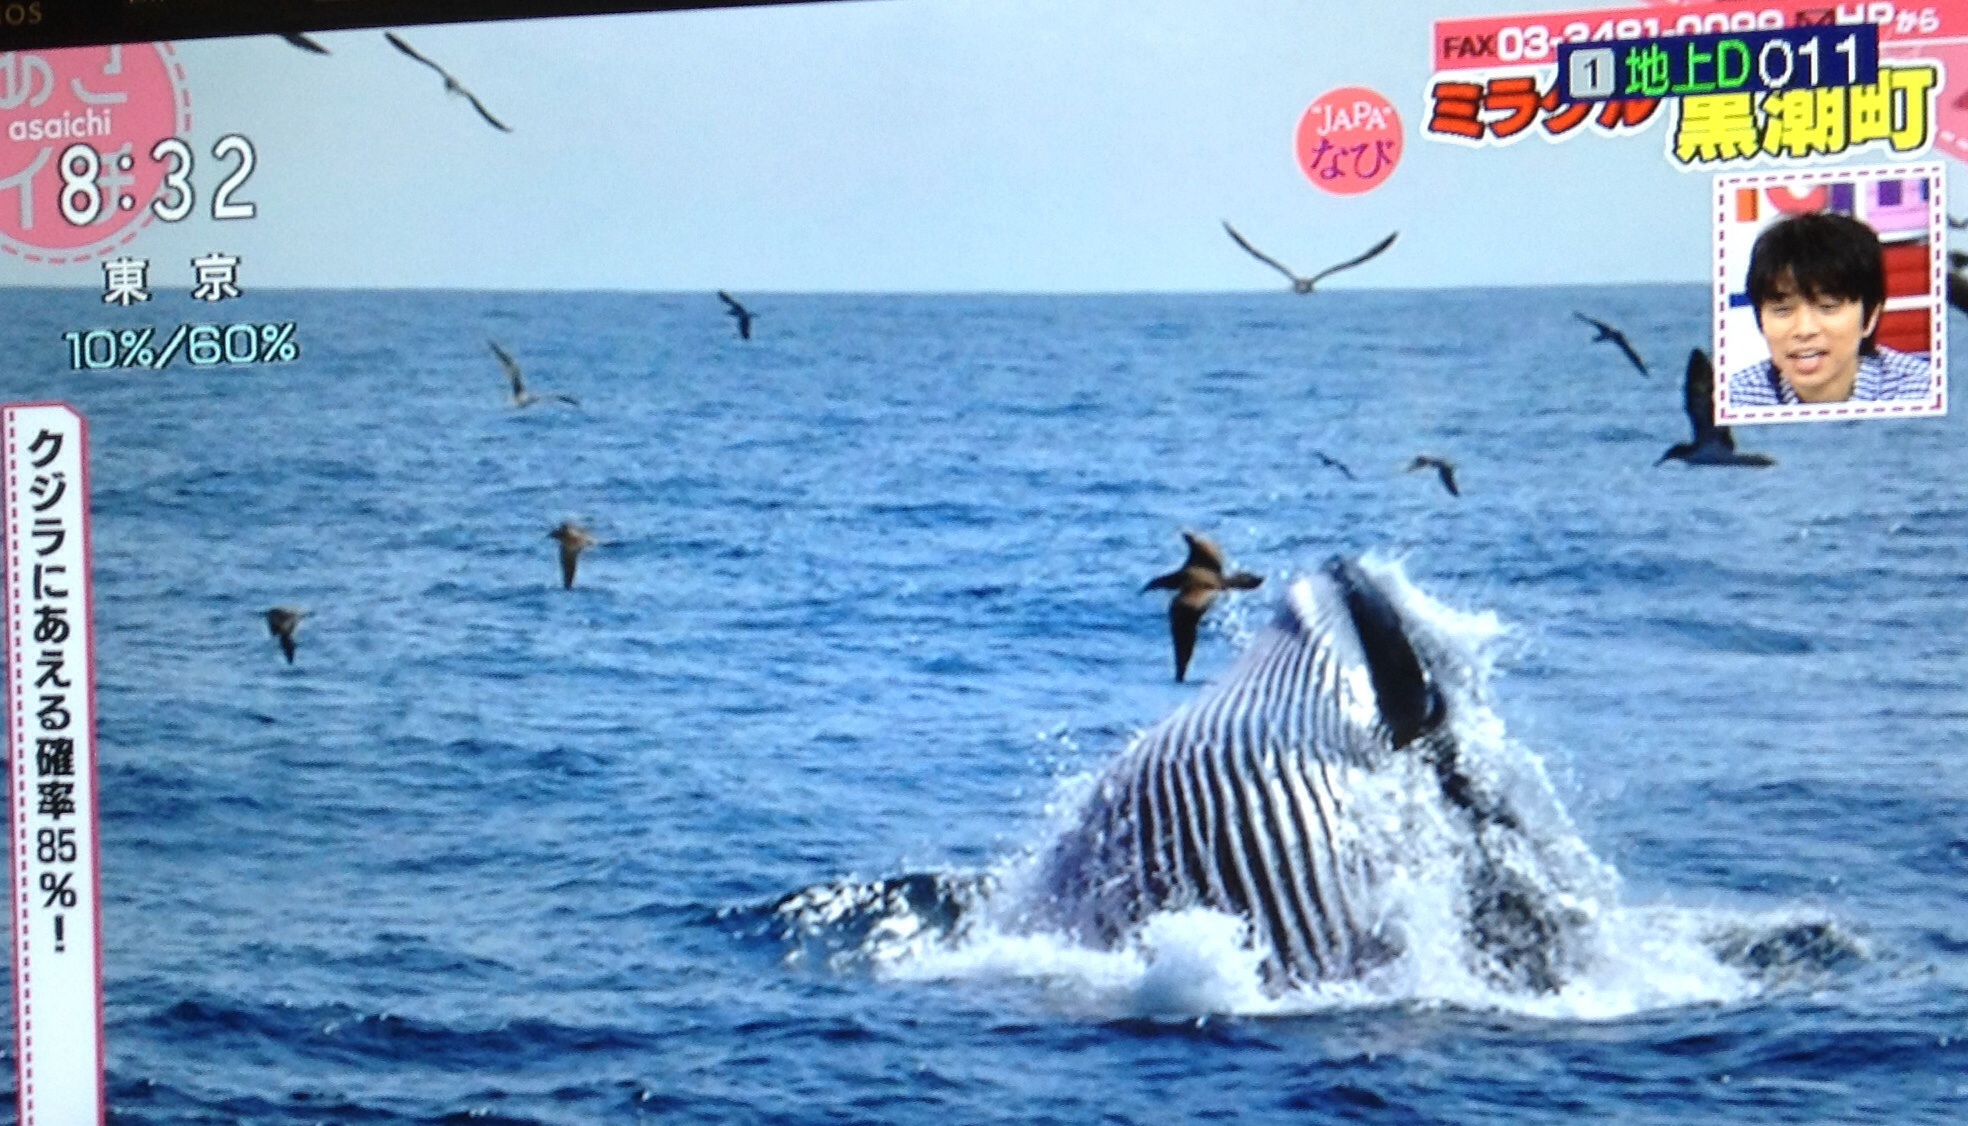 Spotlight on Kuroshiocho, Shikoku the Mecca of whale-watching